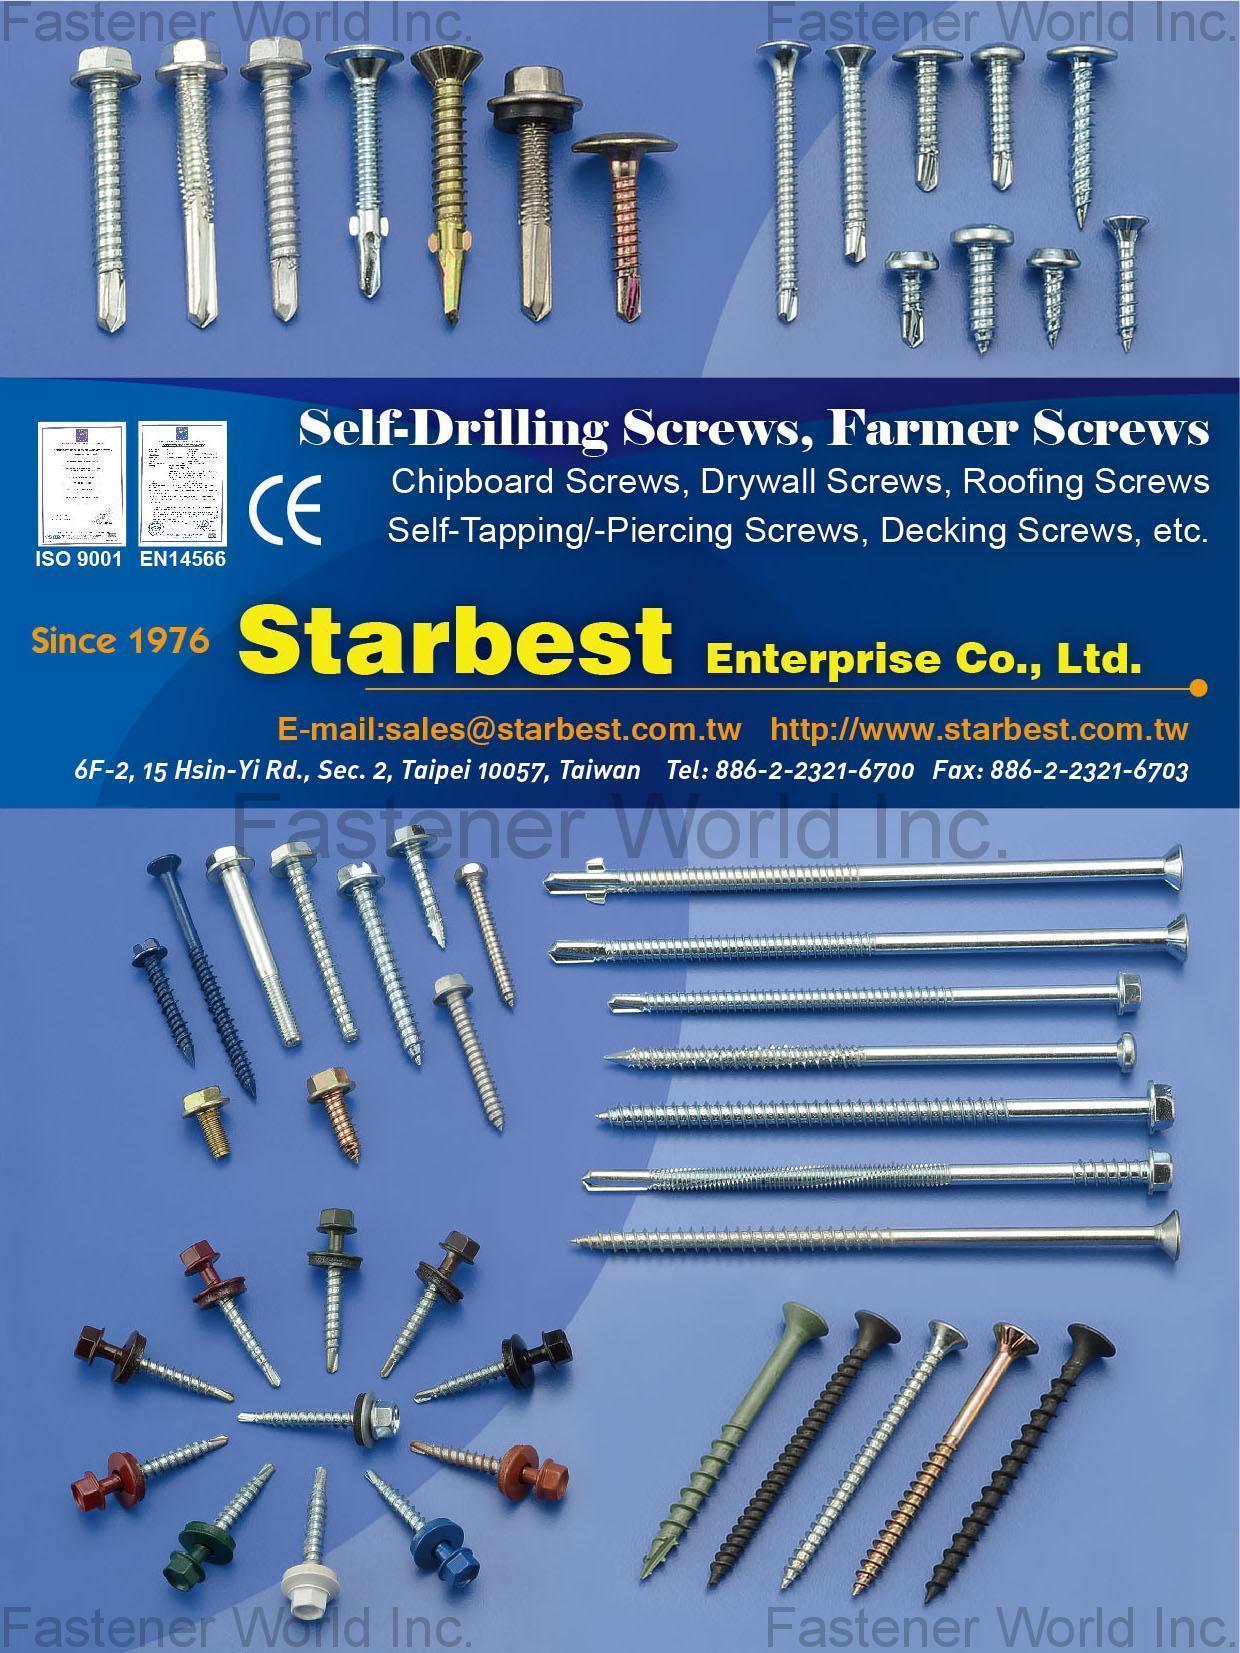 STARBEST ENTERPRISE CO., LTD.  , Self-Drilling Screws, Farmer Screws, Chipboard Screws, Drywall Screws, Roofing Screws, Self-Tapping, Self-Piercing Screws, Decking Screws , Self-drilling Screws